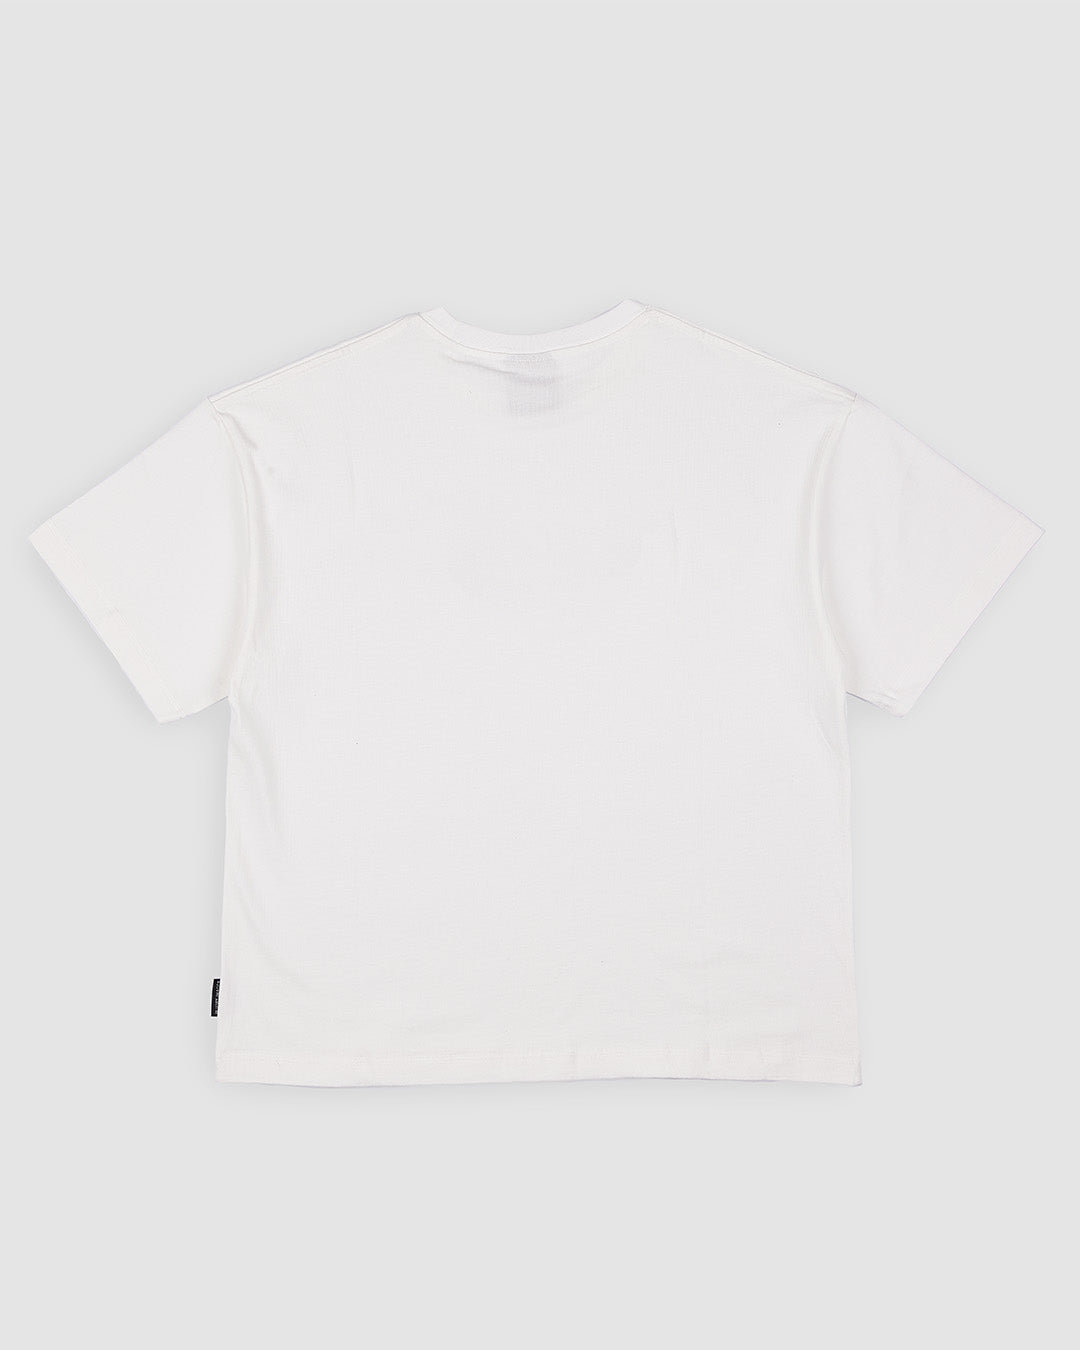 Blurry RTM T-Shirt (White/Red)